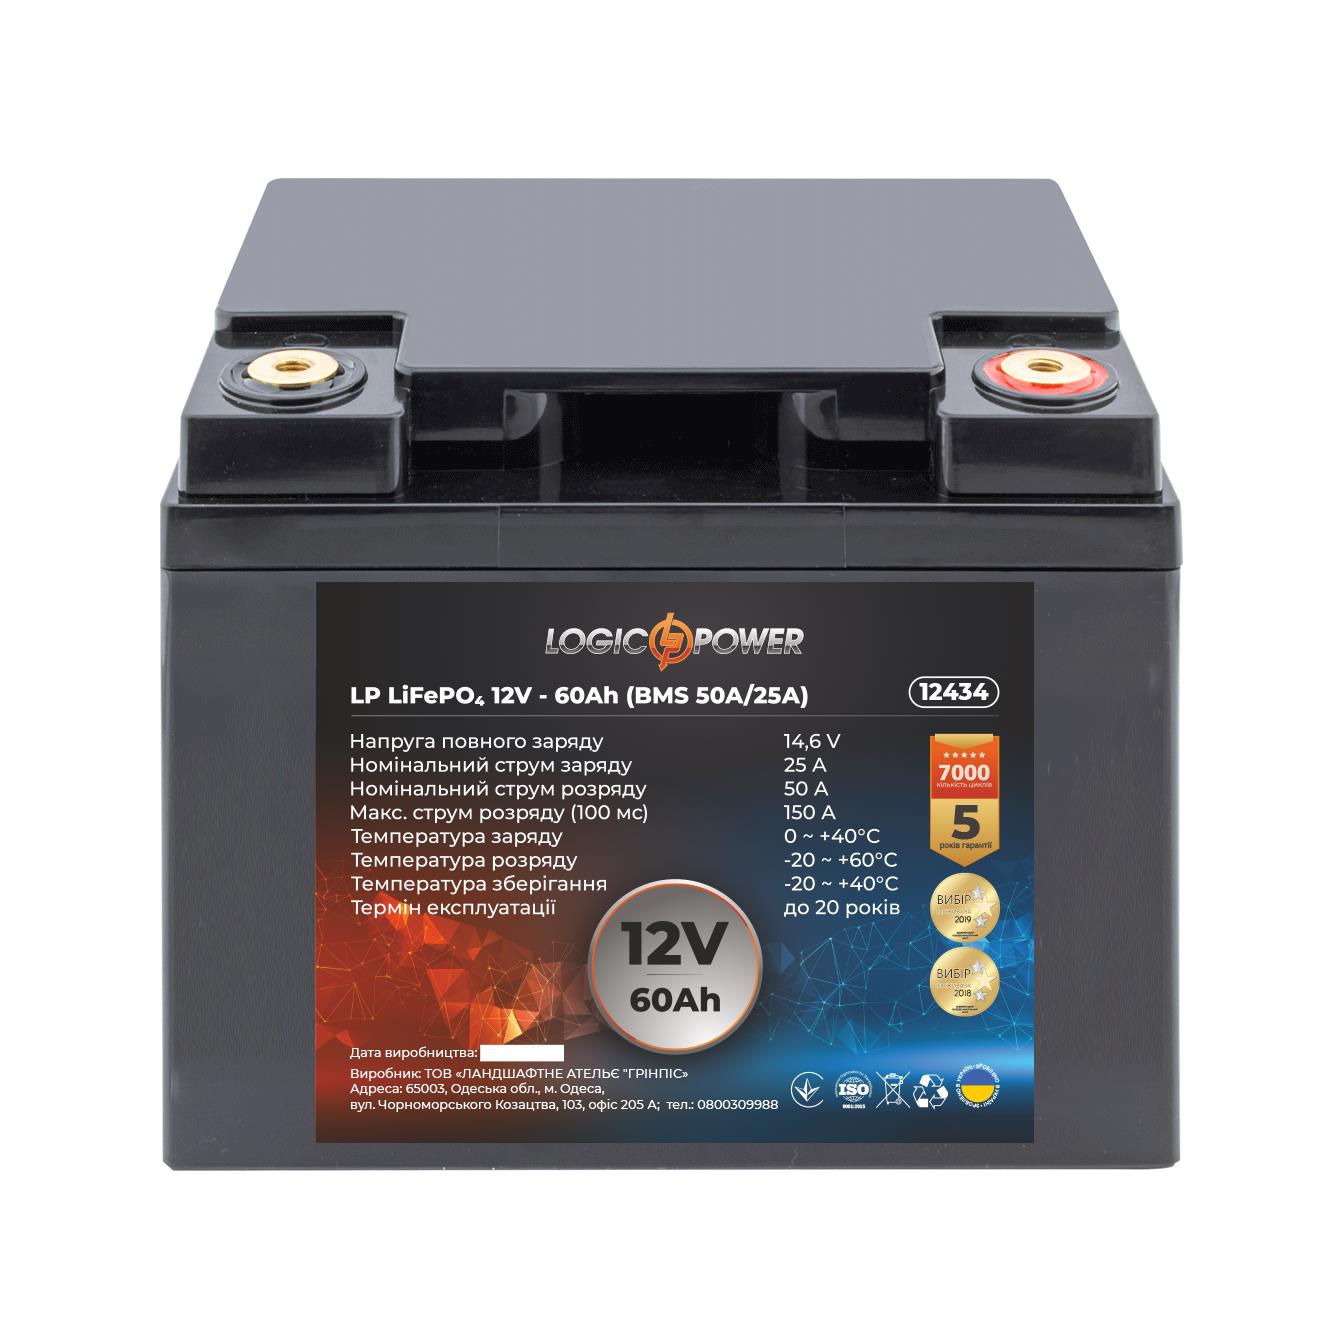 Аккумулятор литий-железо-фосфатный LogicPower LP LiFePO4 12V - 60 Ah (BMS 50A/25А) пластик (12434)